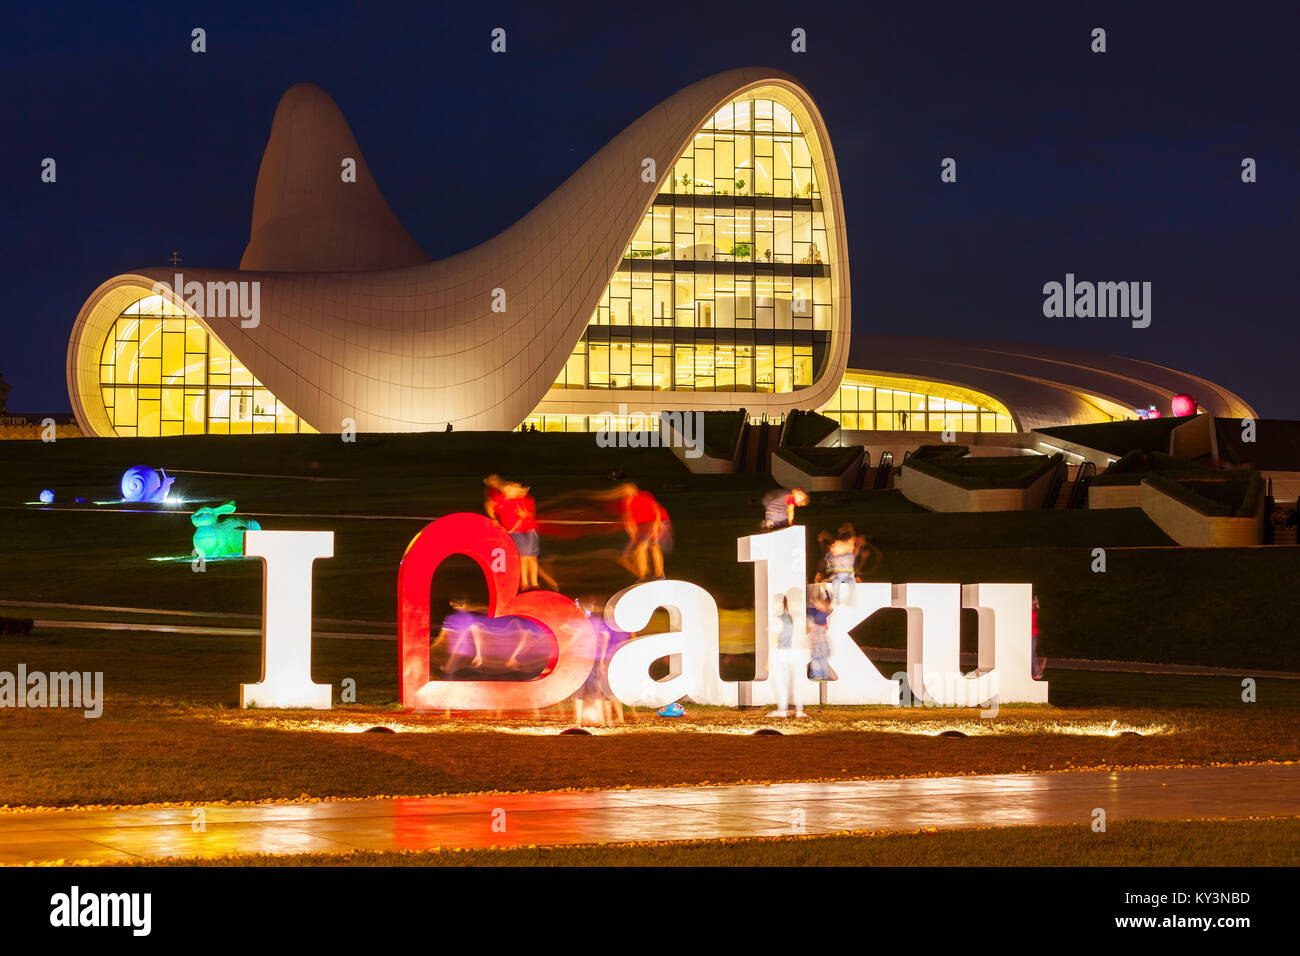 BAKU, AZERBAIJAN - SEPTEMBER 12, 2016: I love Baku monument near the Heydar Aliyev Center at night. It is a building complex in Baku, Azerbaijan. Stock Photo